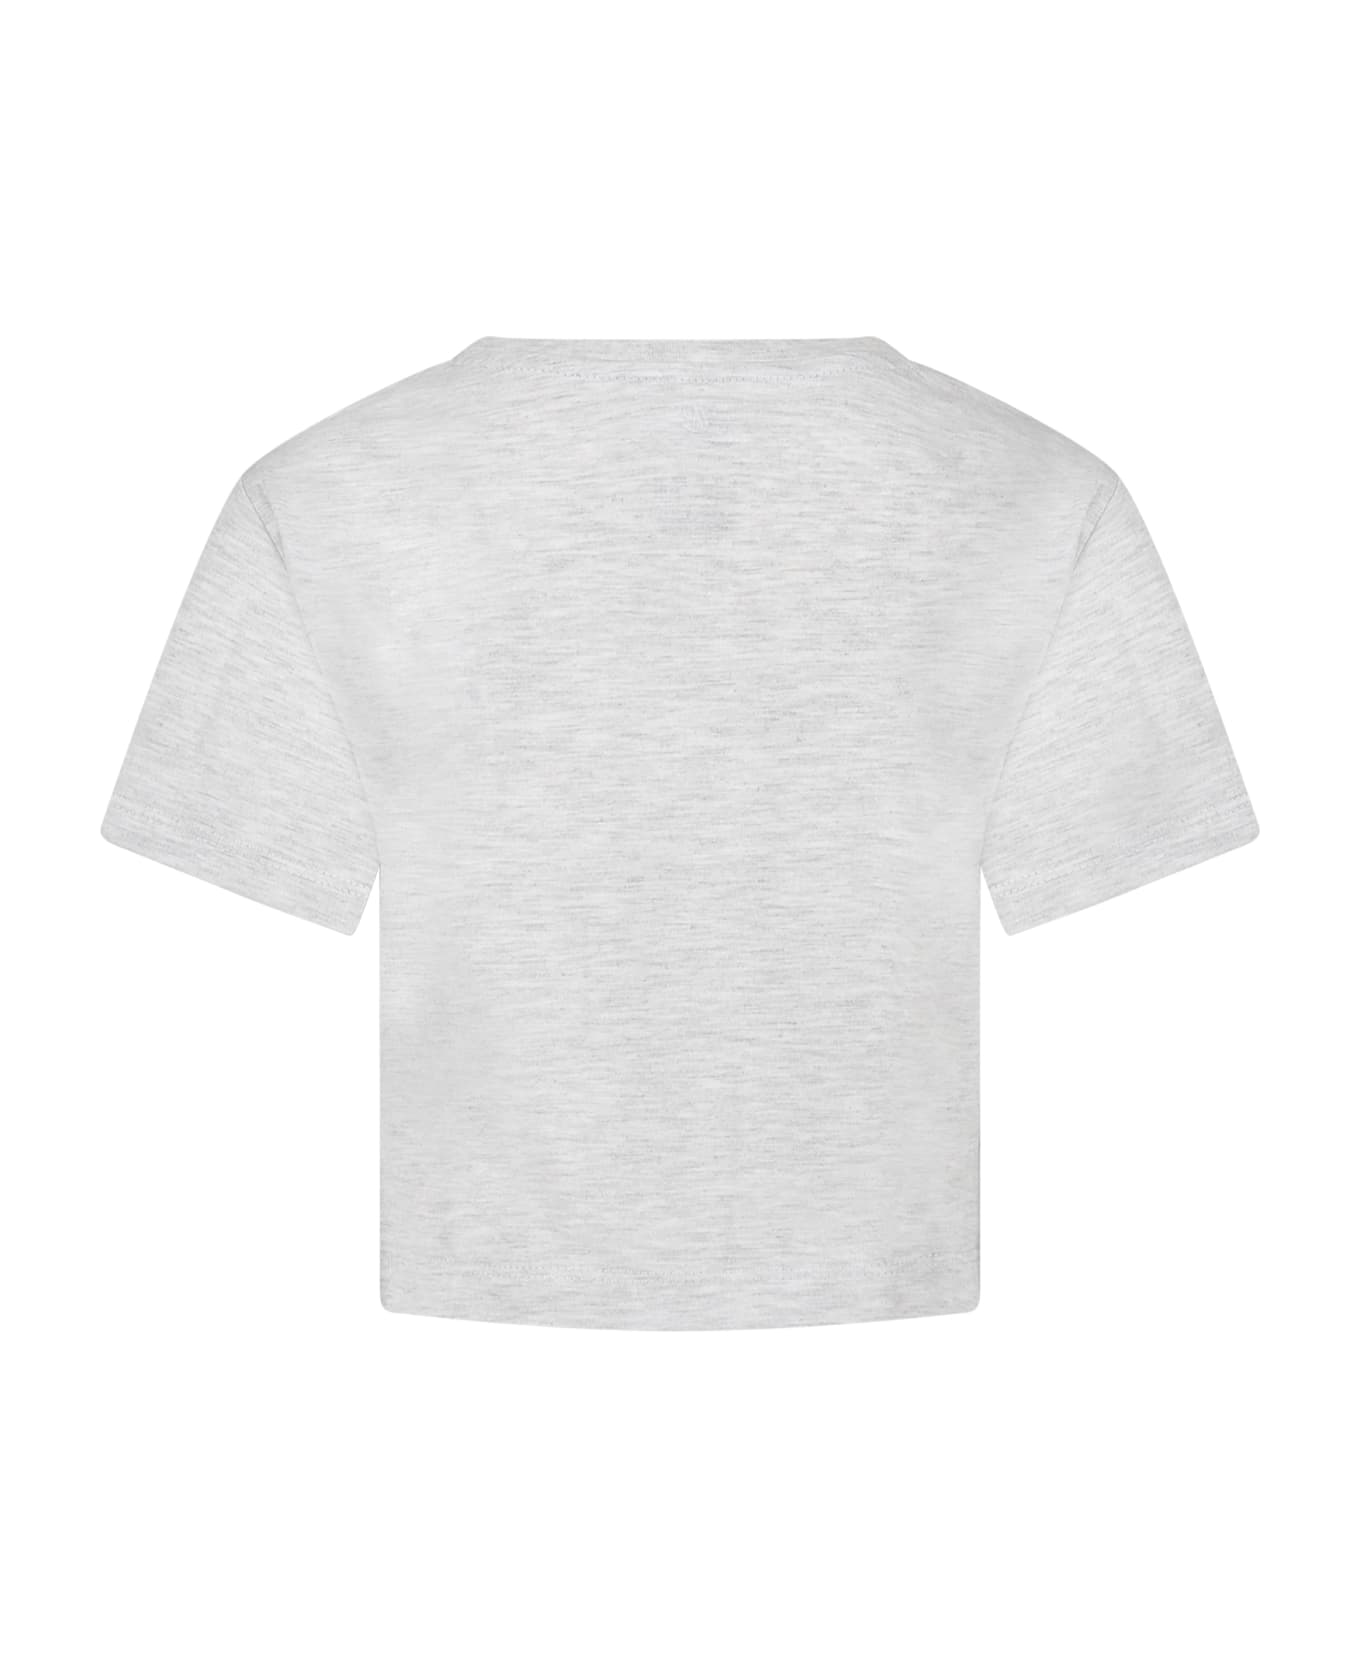 Nike Grey T-shirt Fot Girl With Logo - Grey